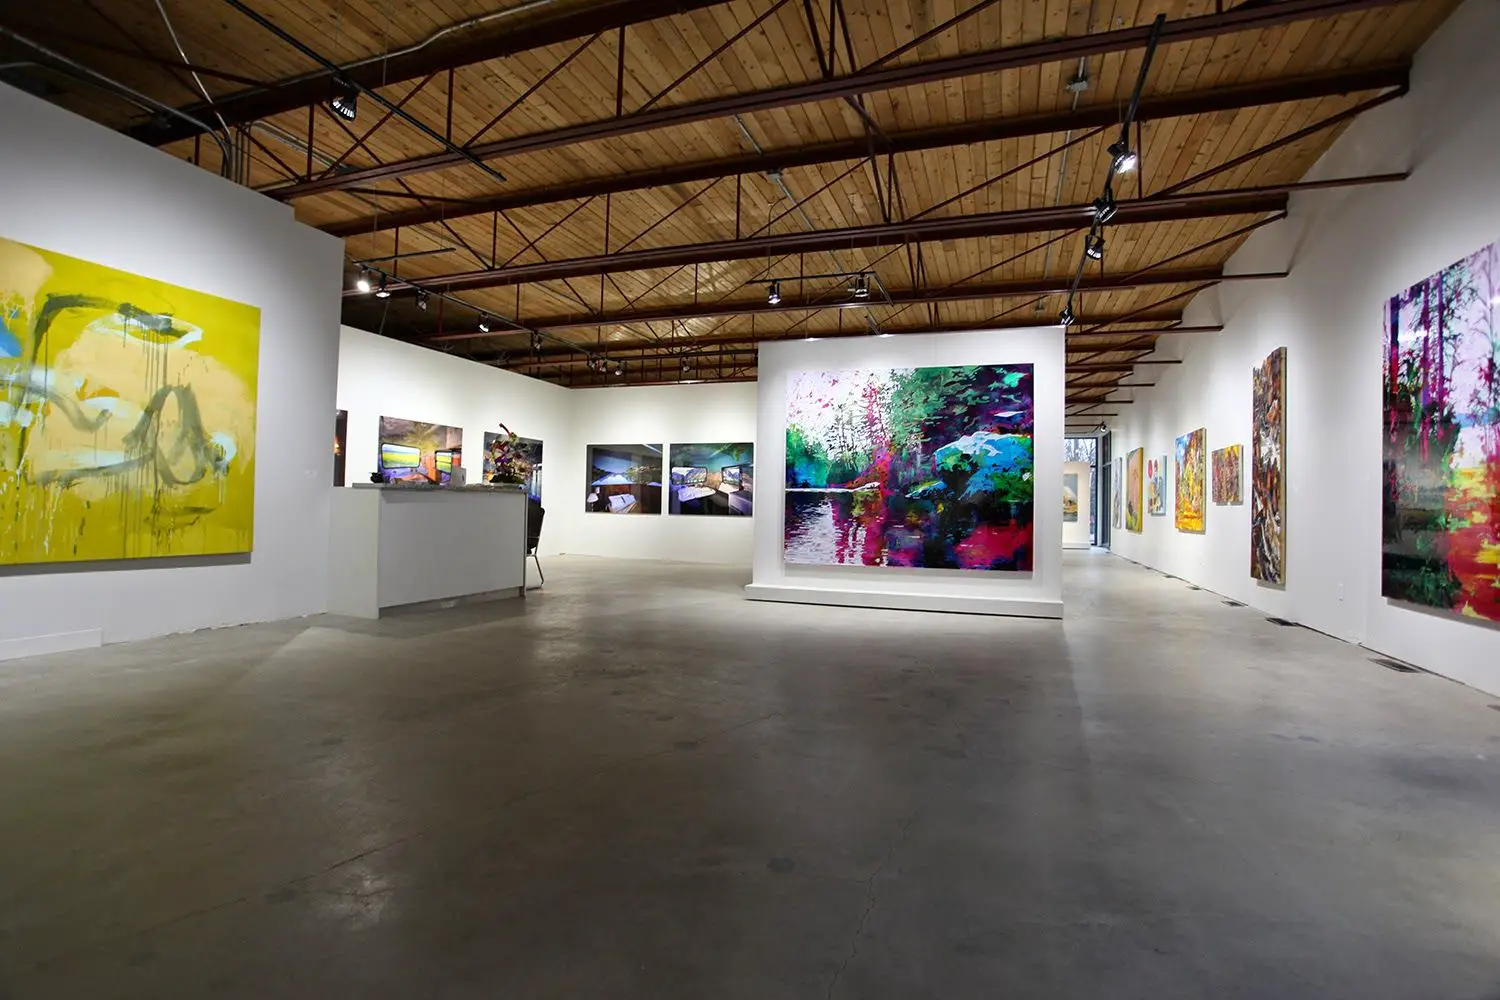 Peter Robertson Gallery